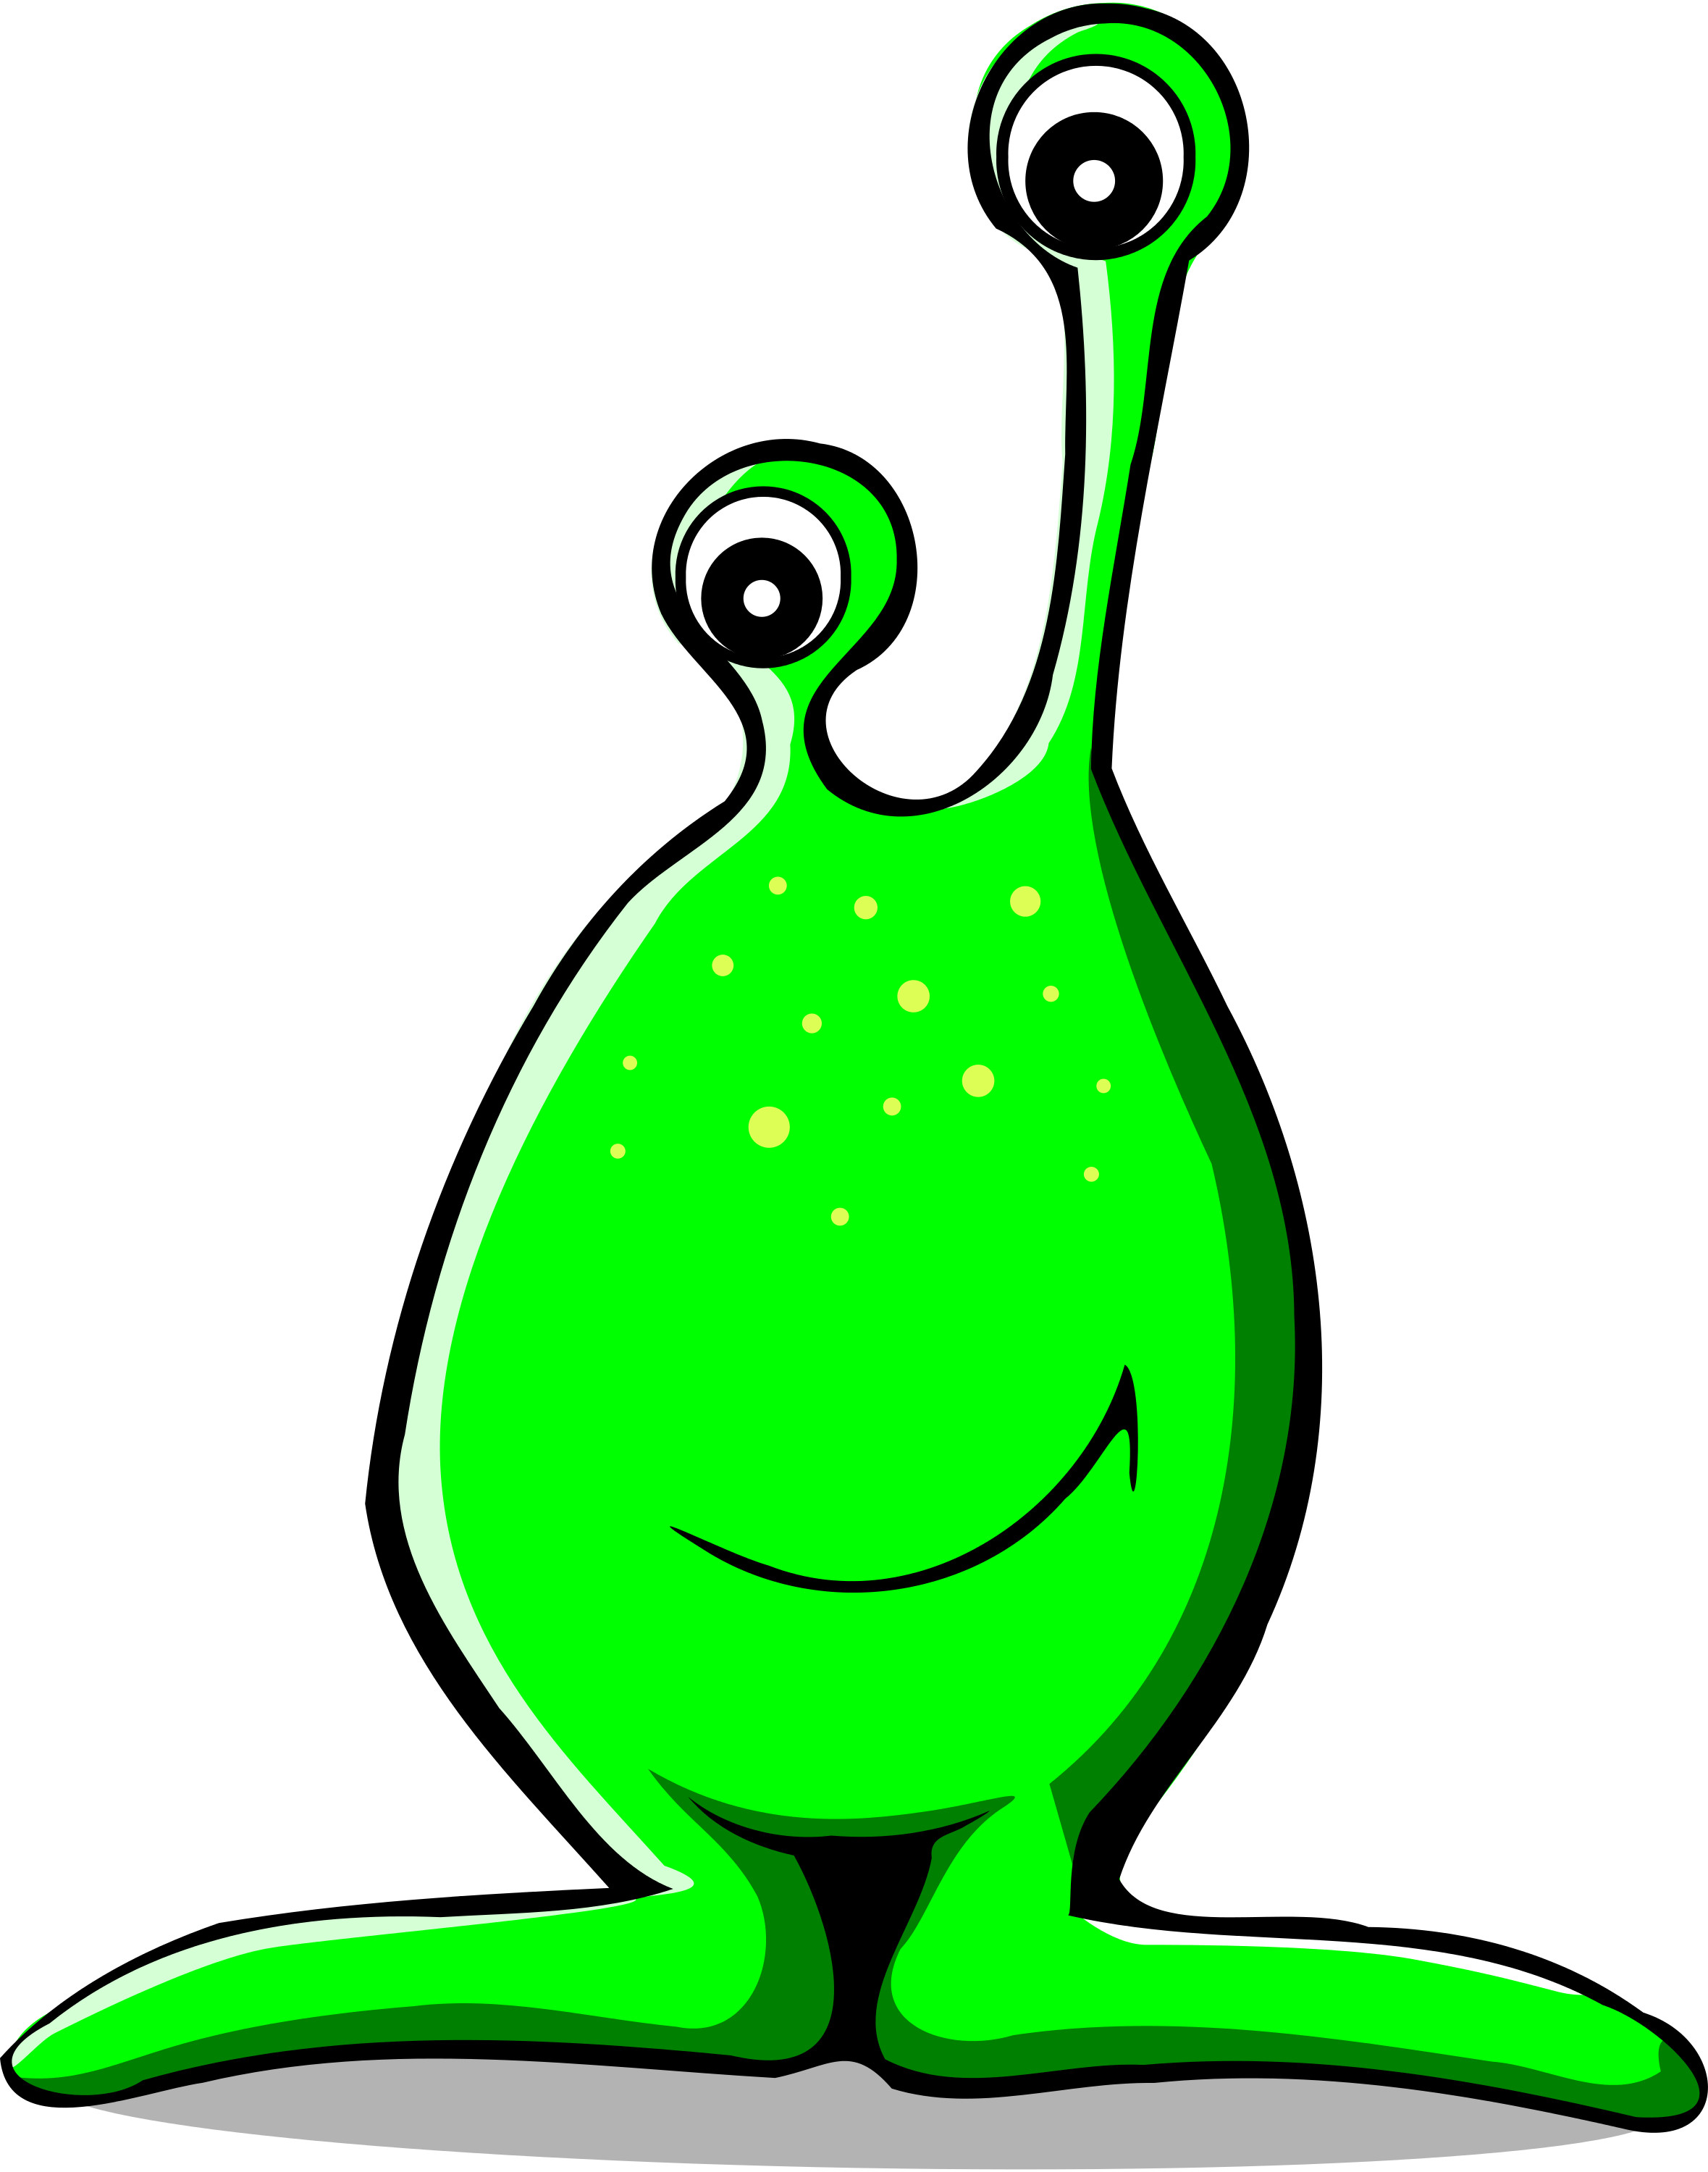 Funny Green Alien Clip Art Image